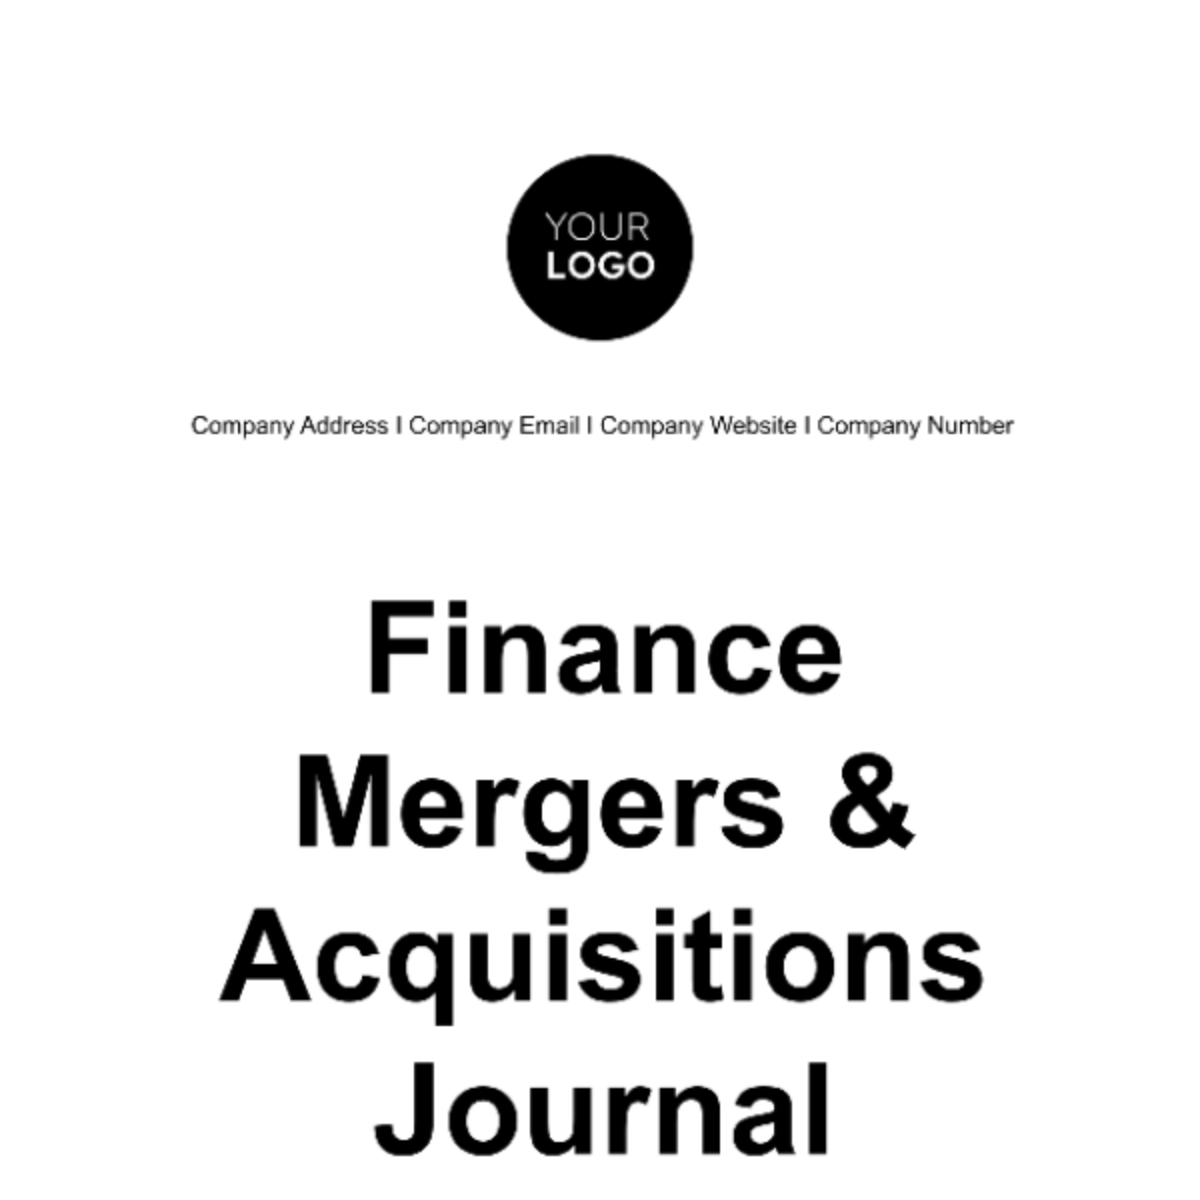 Finance Mergers & Acquisitions Journal Template